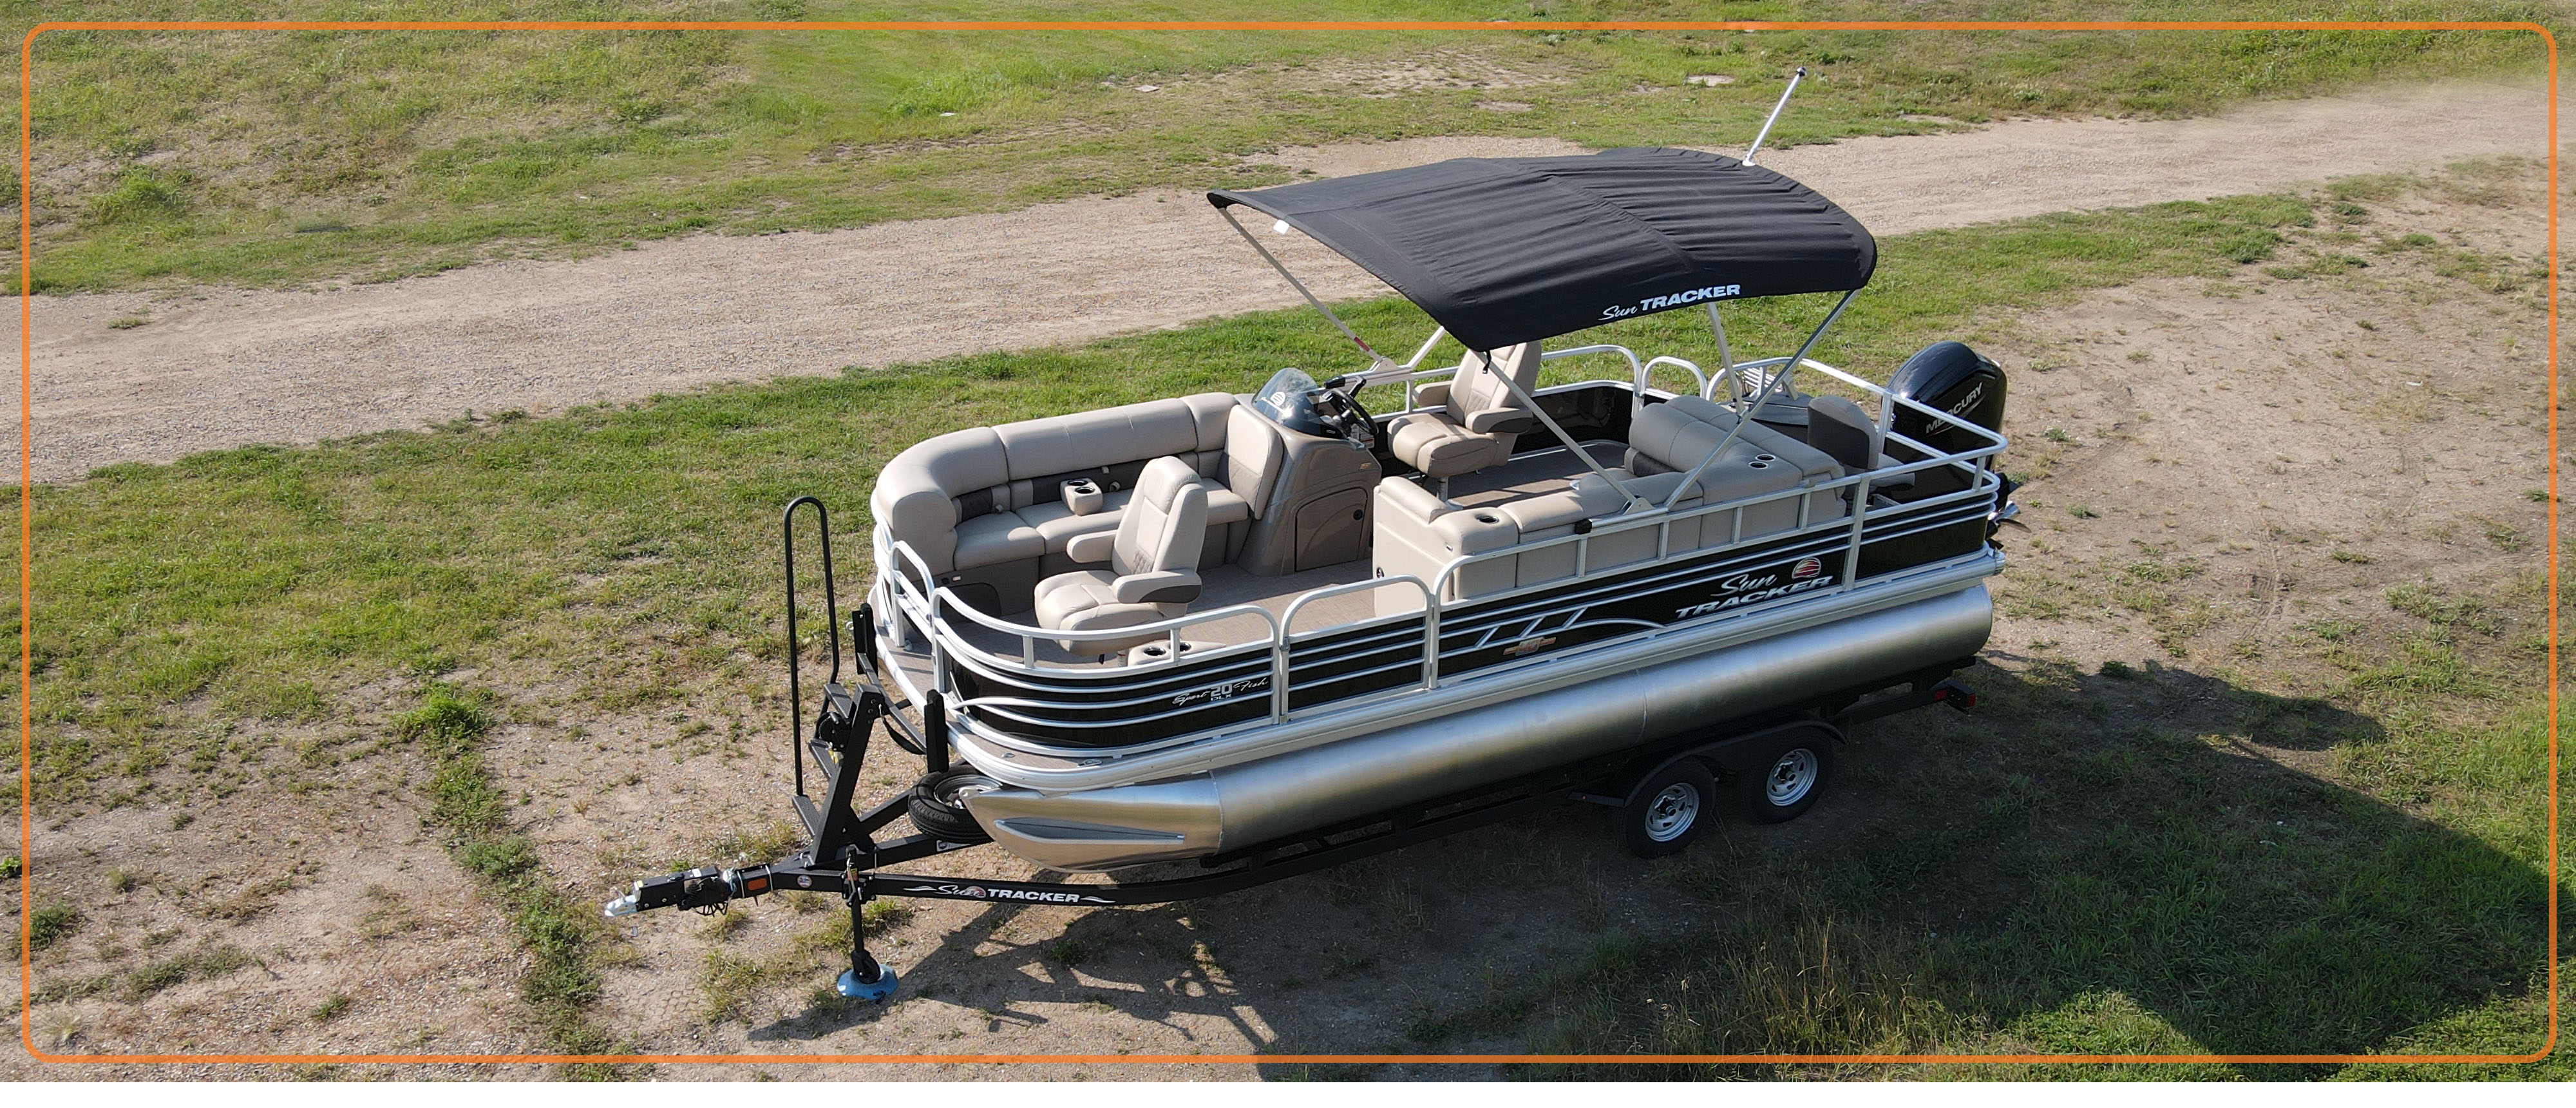 2023 Suntracker SportFish 20 DLX, Exclusive Auto Marine, fishing pontoon boat, power boat, outboard motors, mercury marine